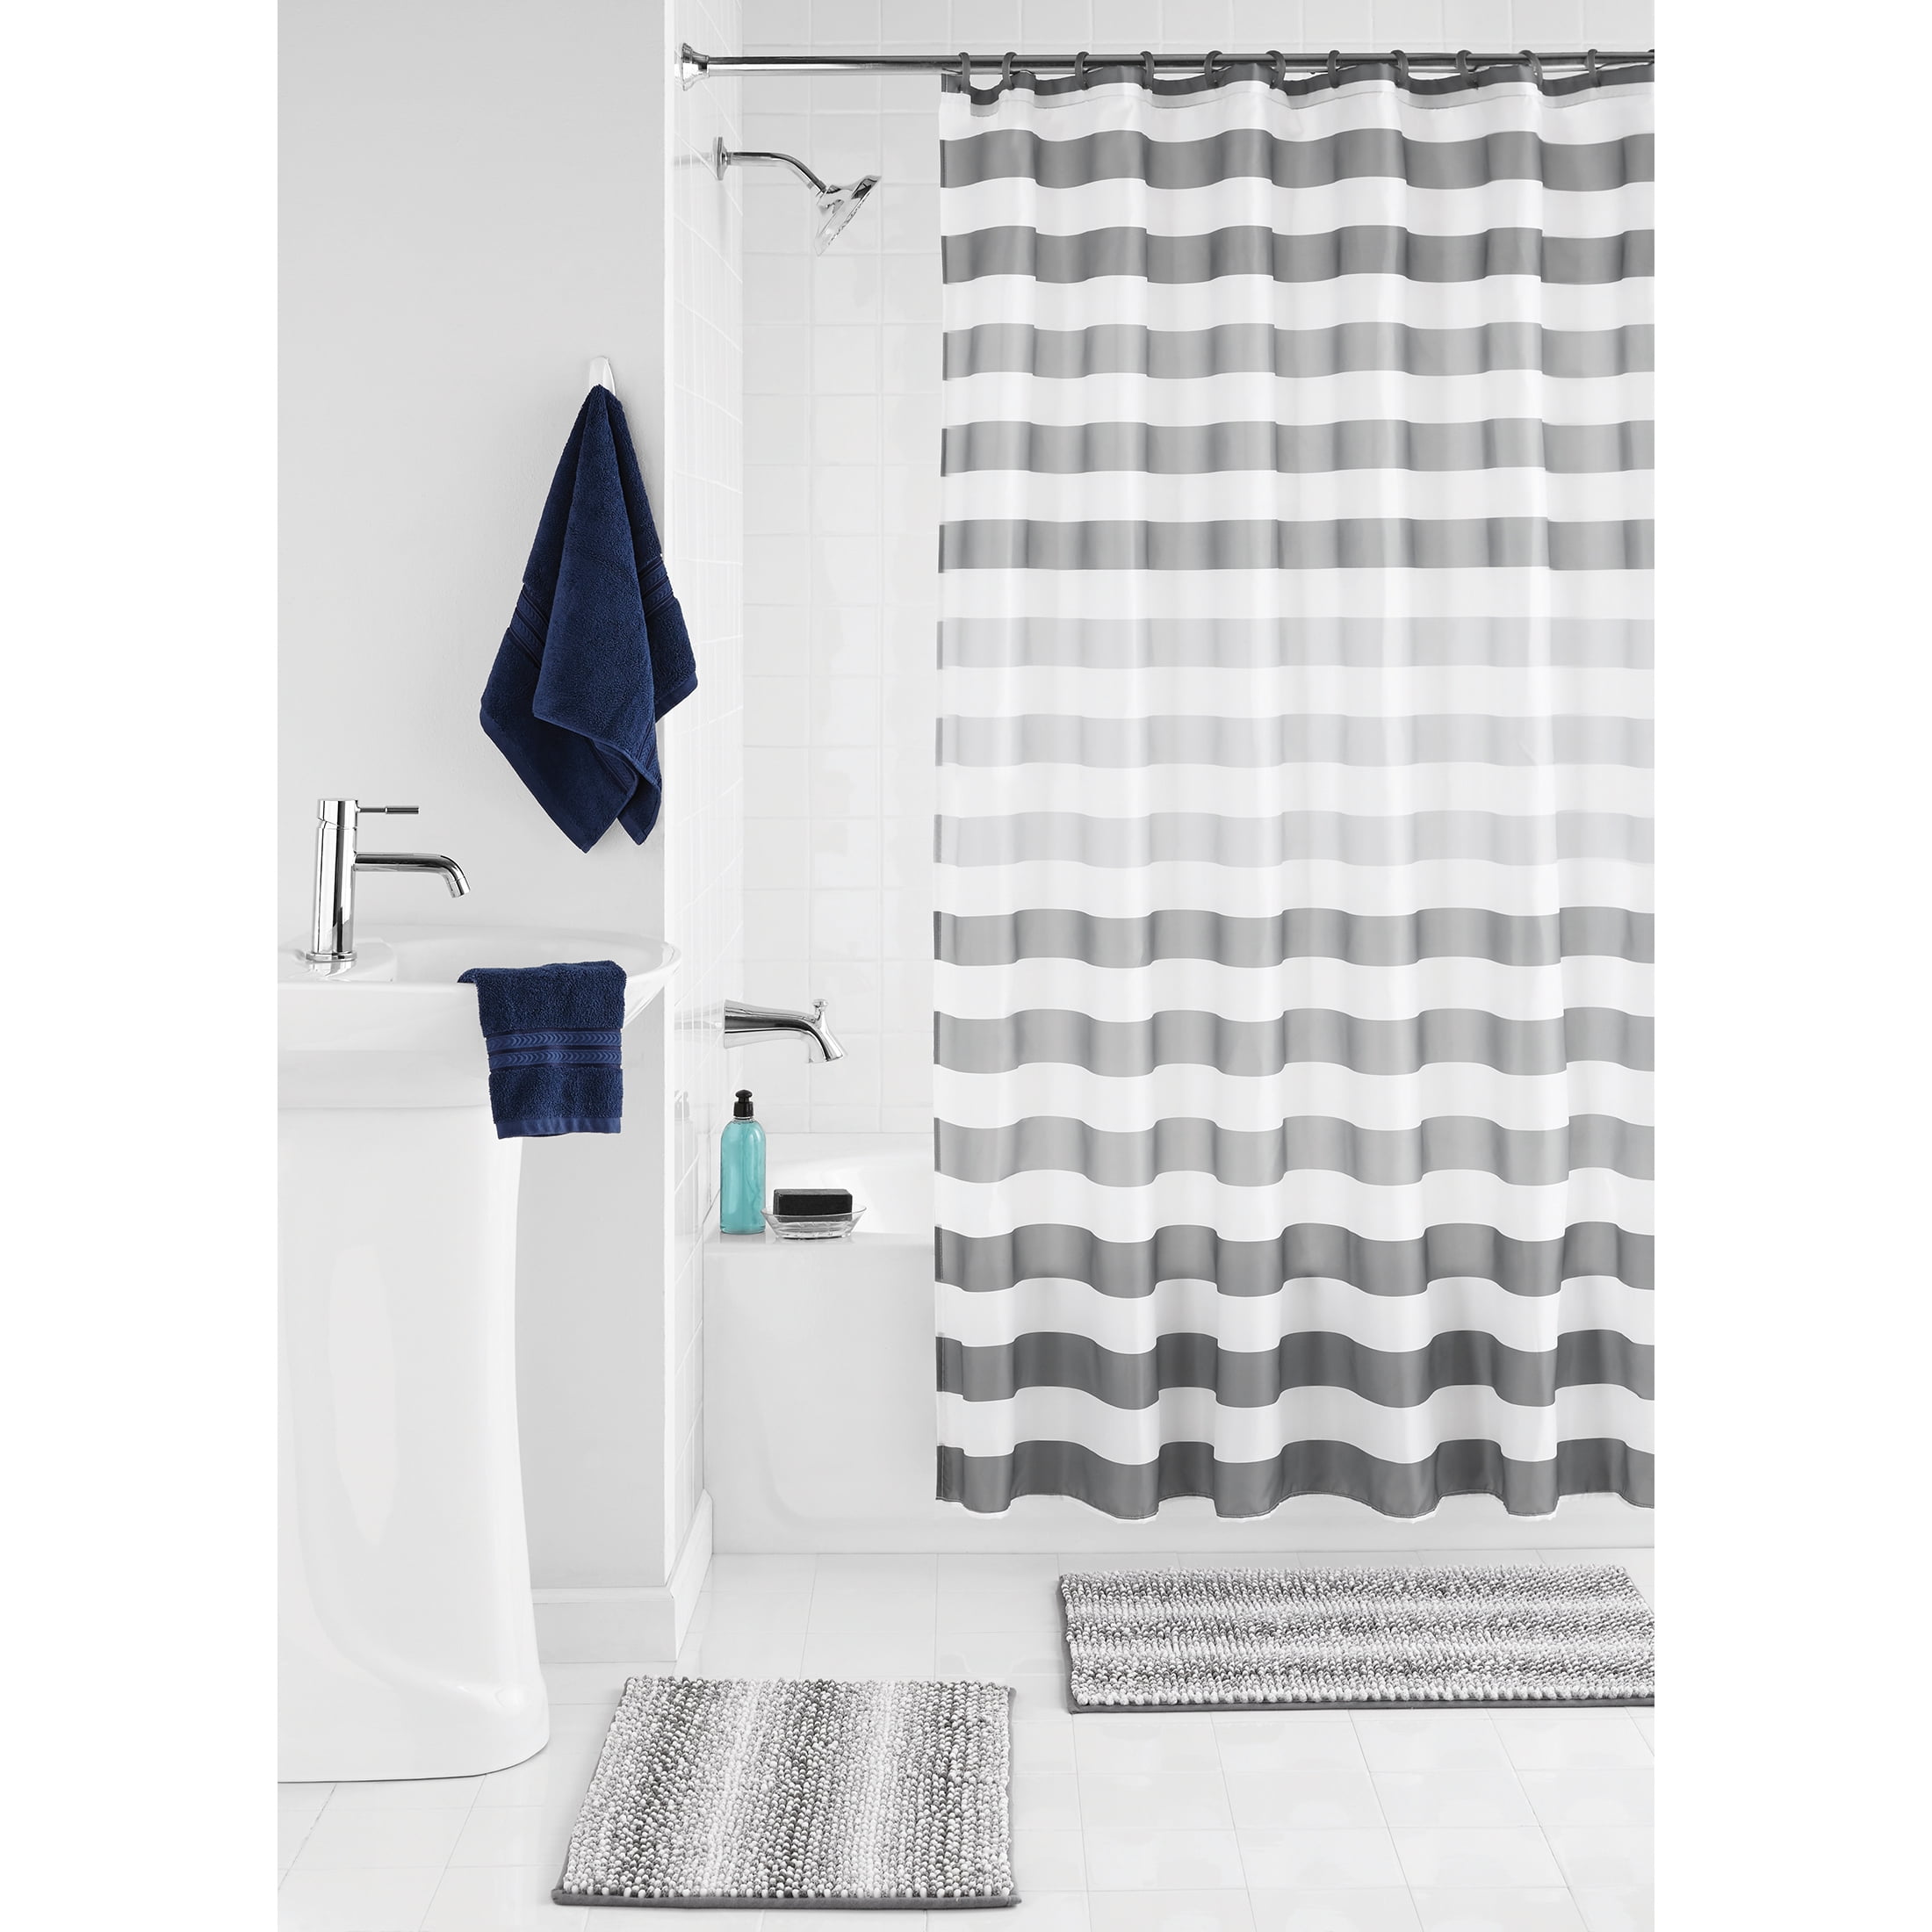 Bathroom Waterproof Fabric Shower Curtain Set Black Dot White & Blue Stripe Dogs 